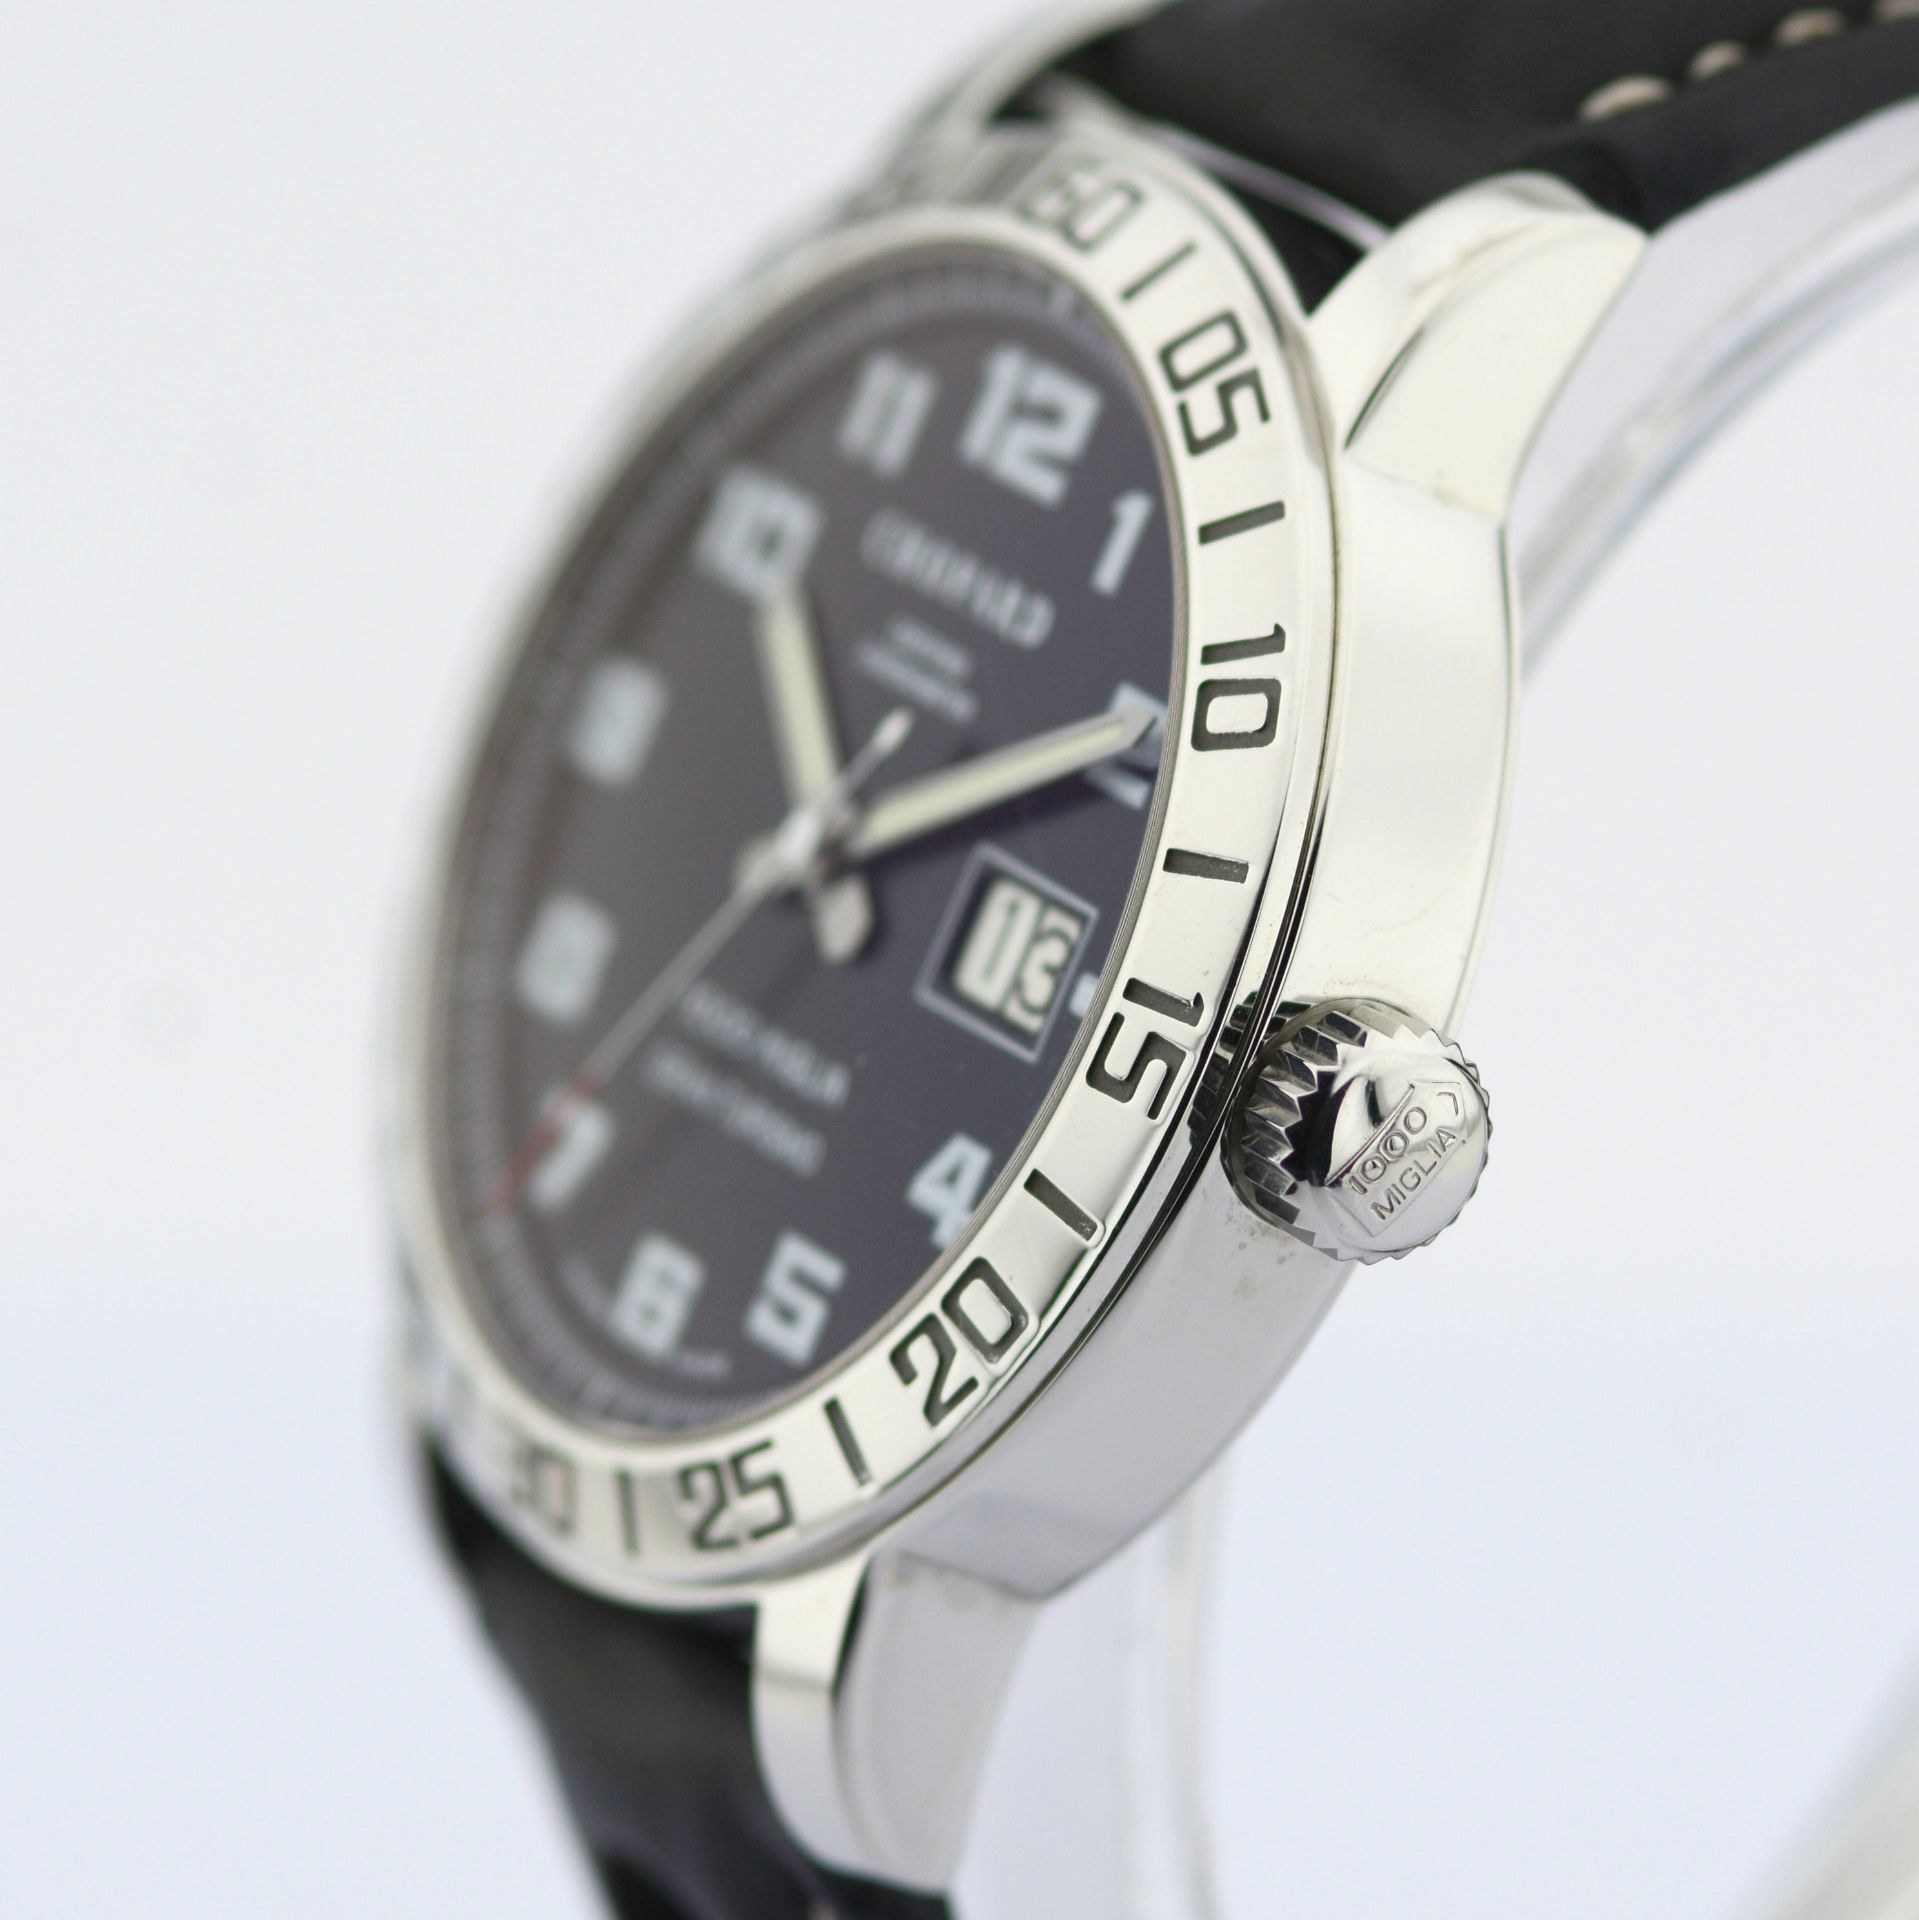 Chopard / 1000 Miglia Grand Turismo Prototype - Gentlmen's Steel Wrist Watch - Image 5 of 8